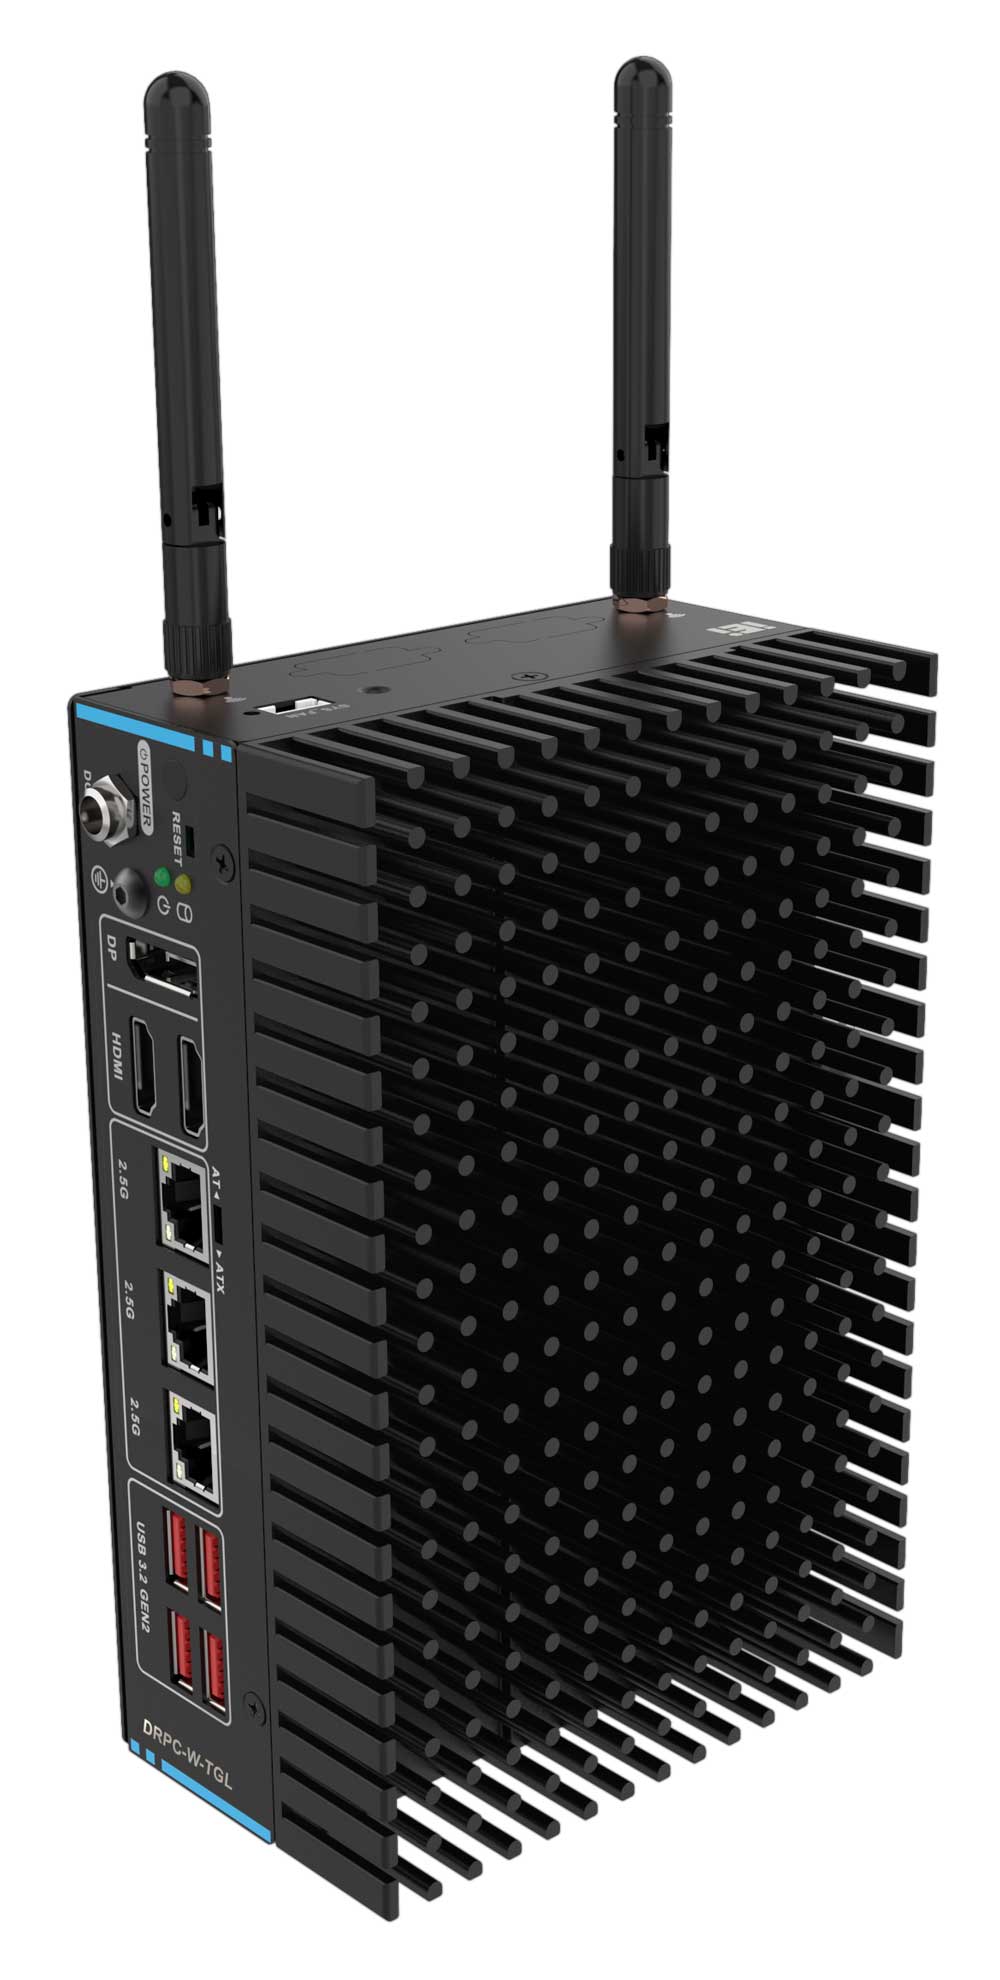 Embedded PC DRPC-W-TGL-U-CC-R10 Antenne